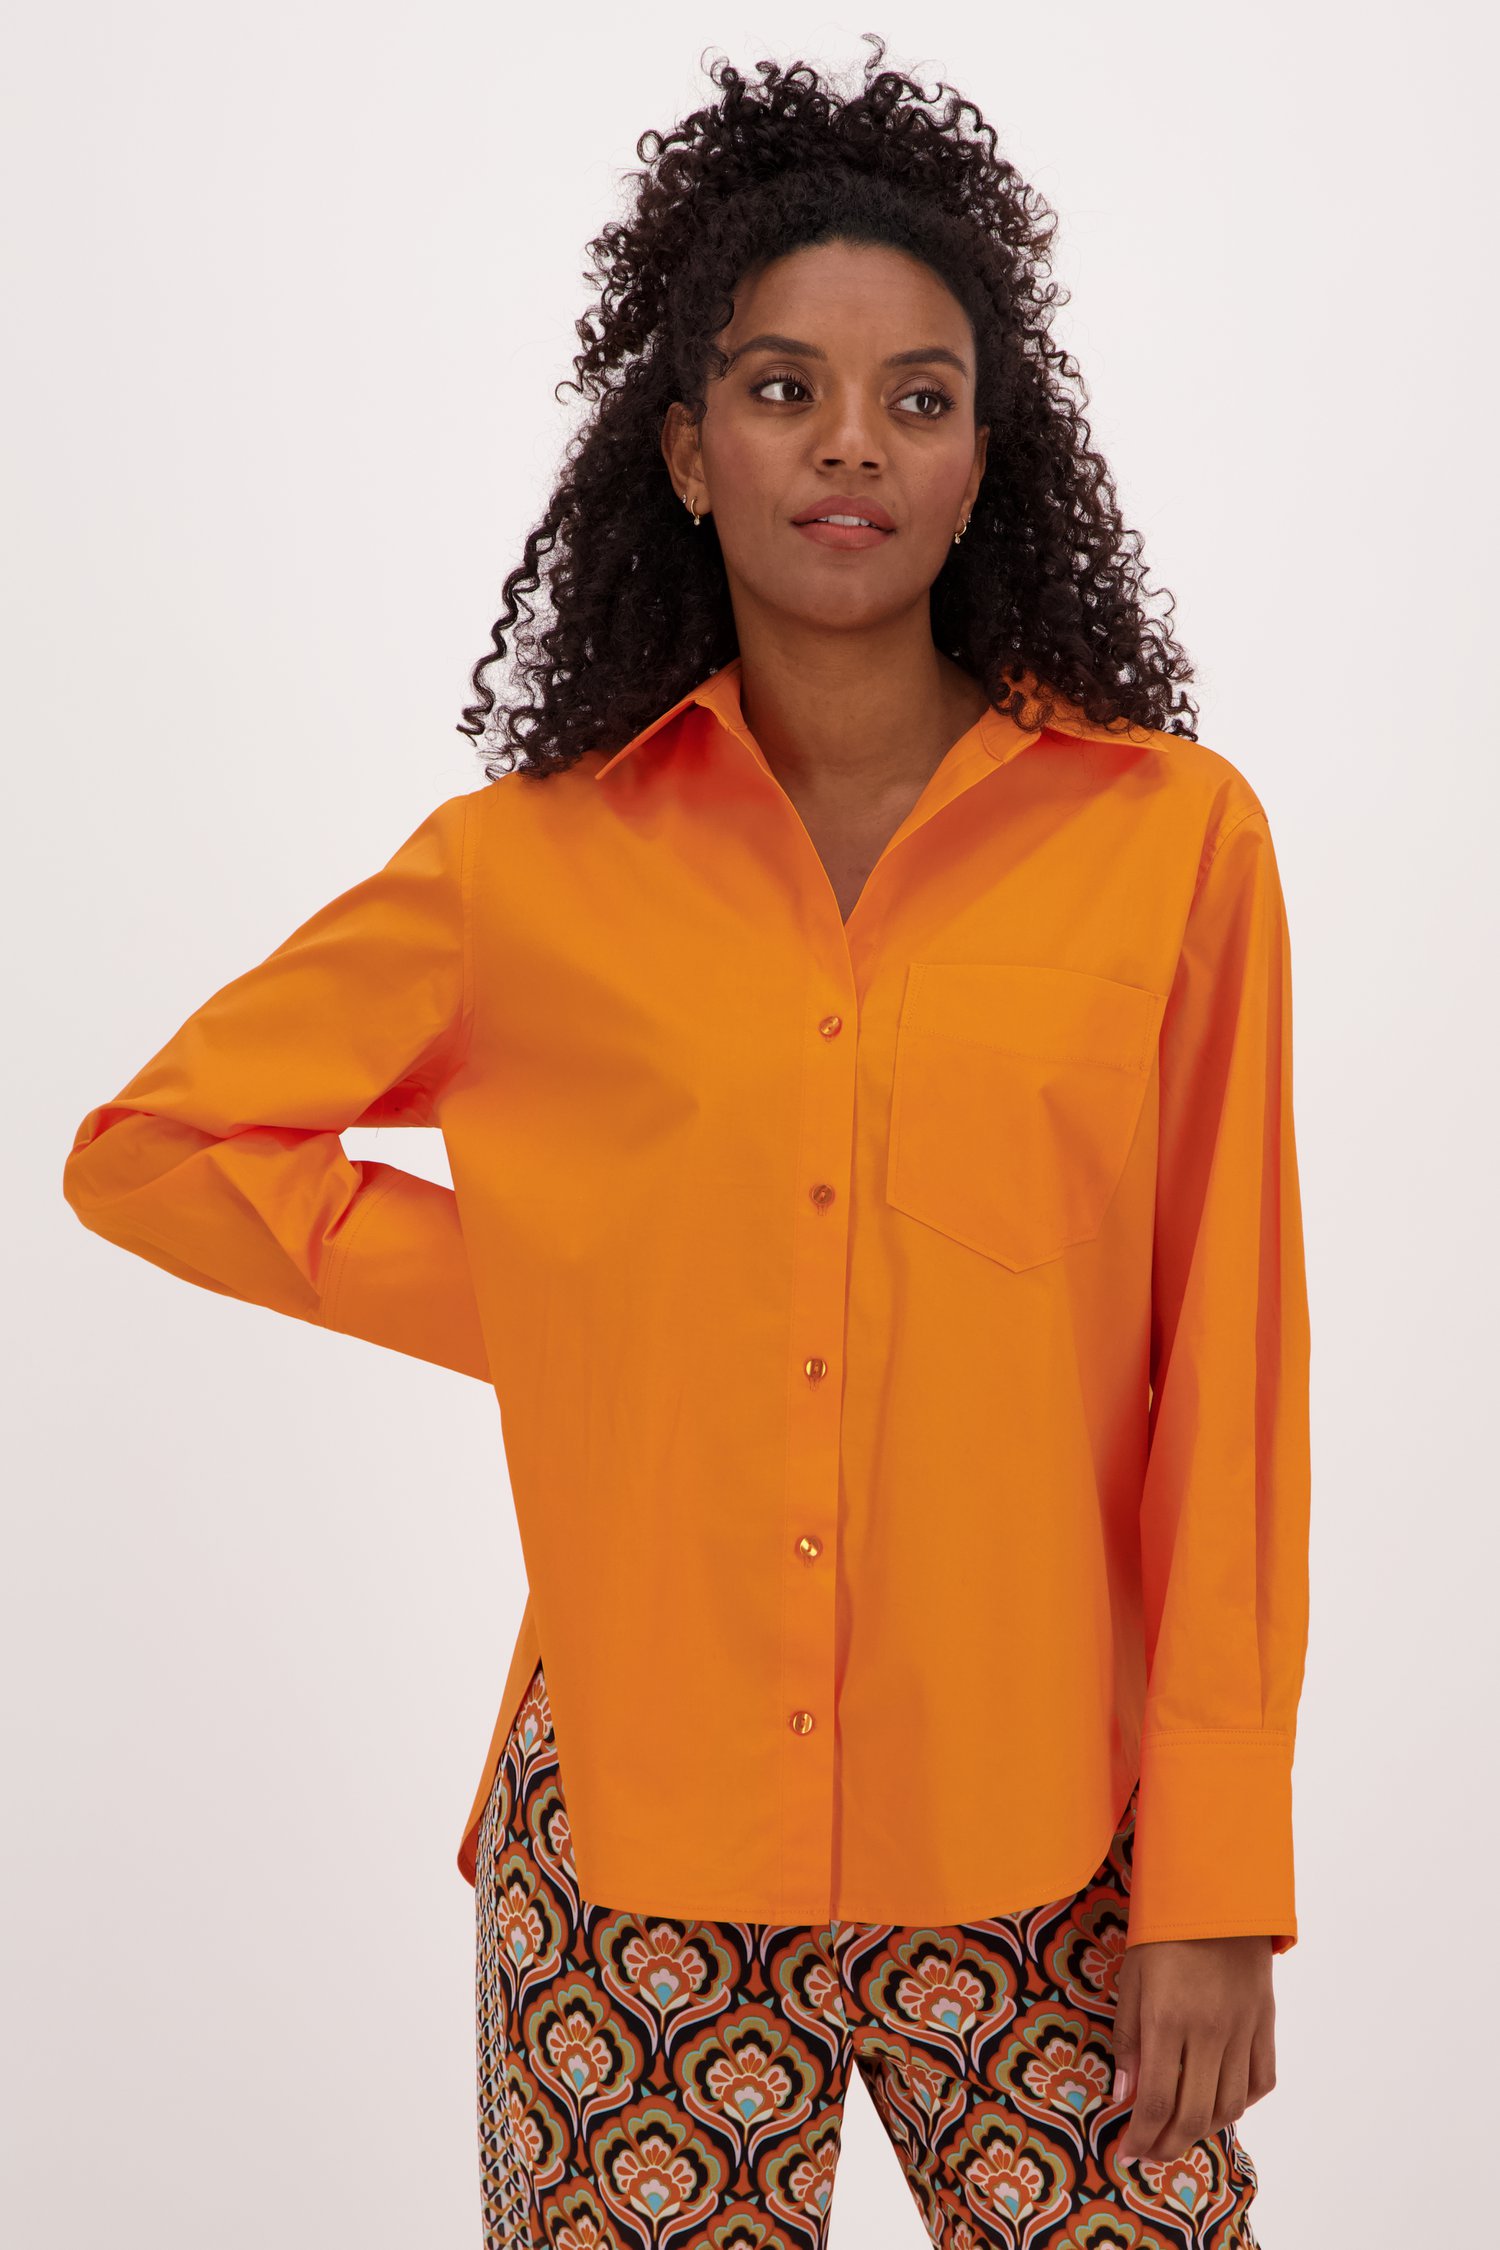 Monopoly Ambacht kapsel Oranje hemdblouse van Louise | 3580916 | e5